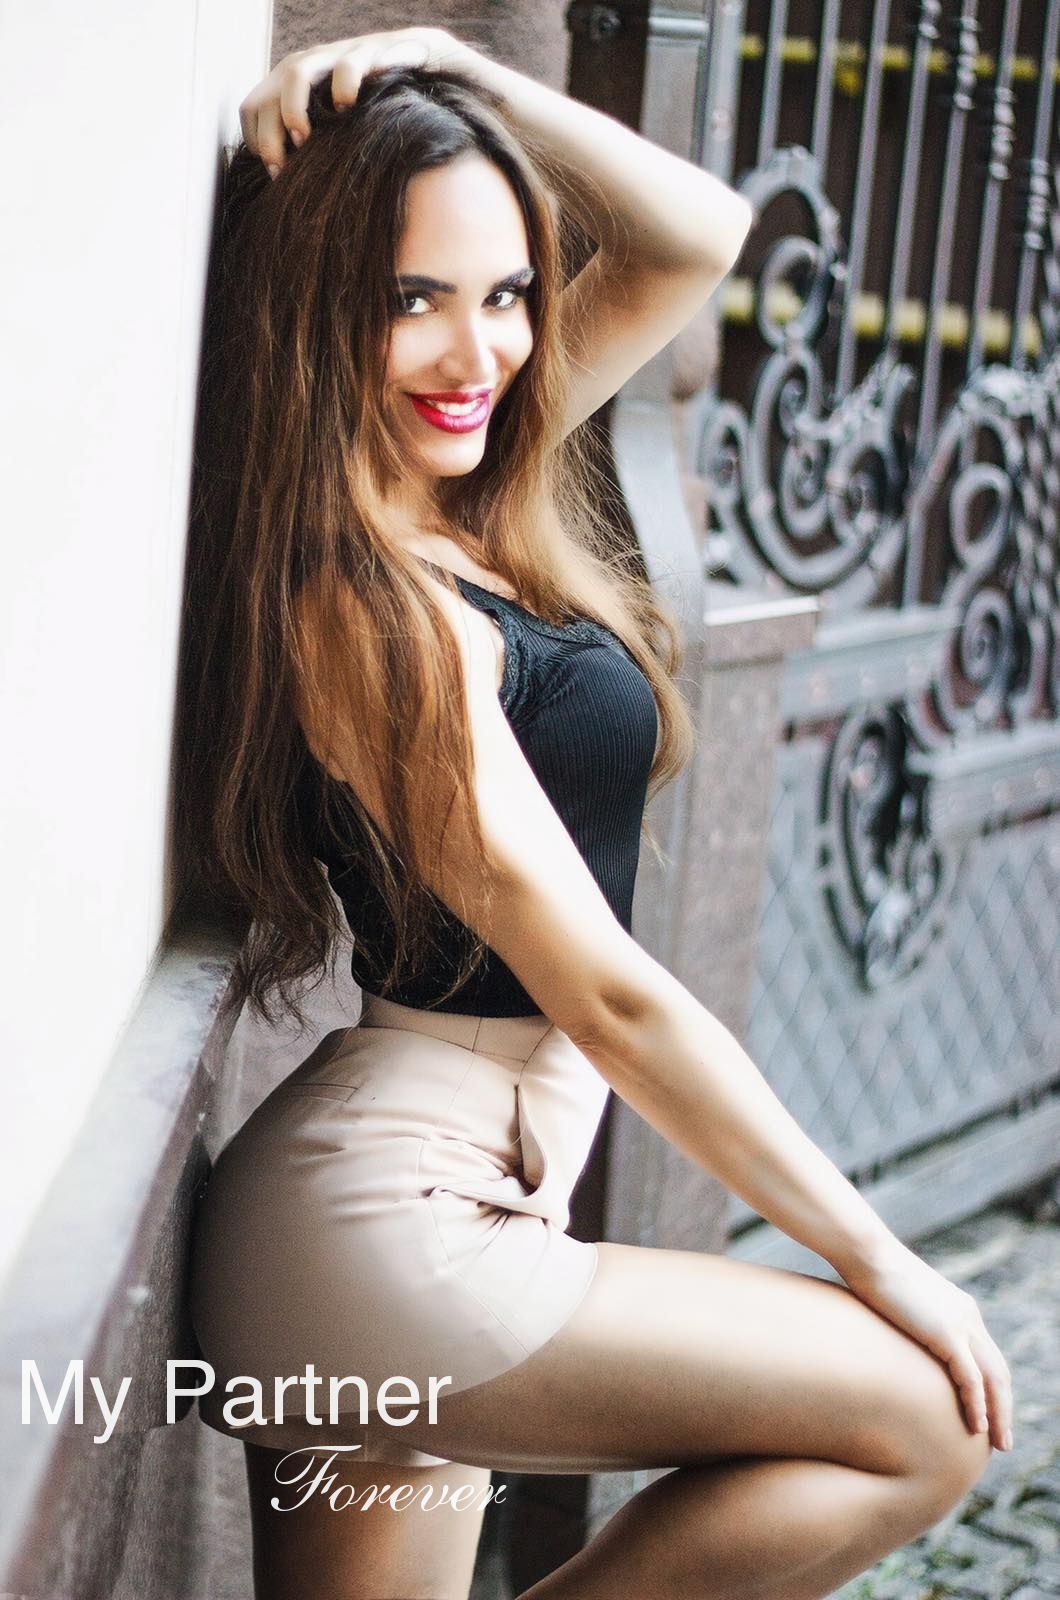 Dating Service to Meet Sexy Ukrainian Lady Elena from Kiev, Ukraine